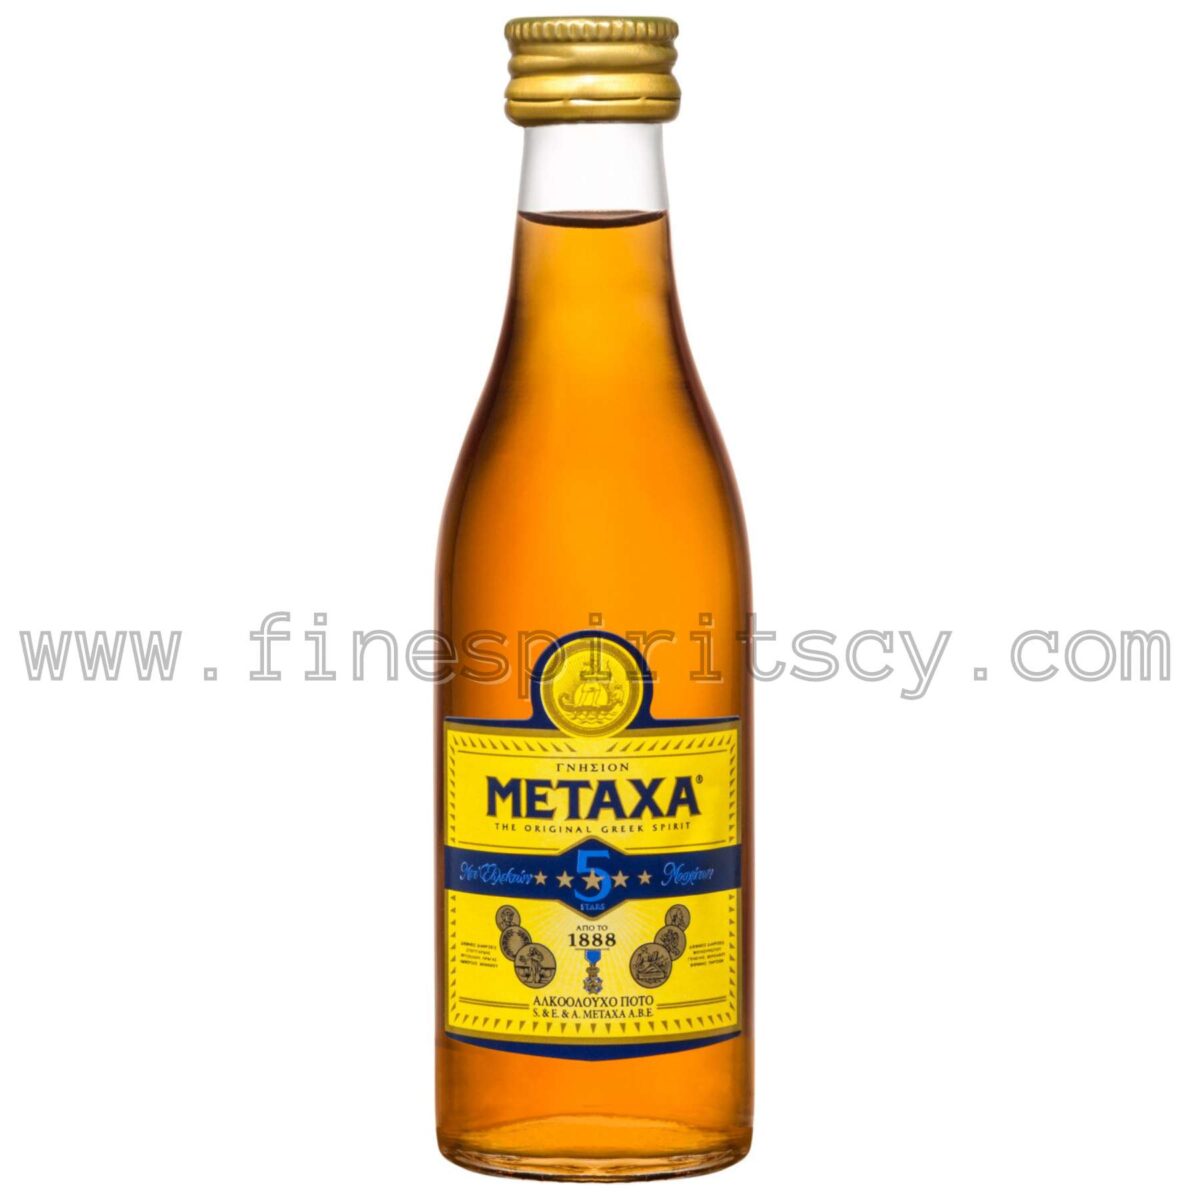 Metaxa 5 Stars Fine Spirits Cyprus 50ml 5cl mini miniature Order Online Price Cheap Best FSCY